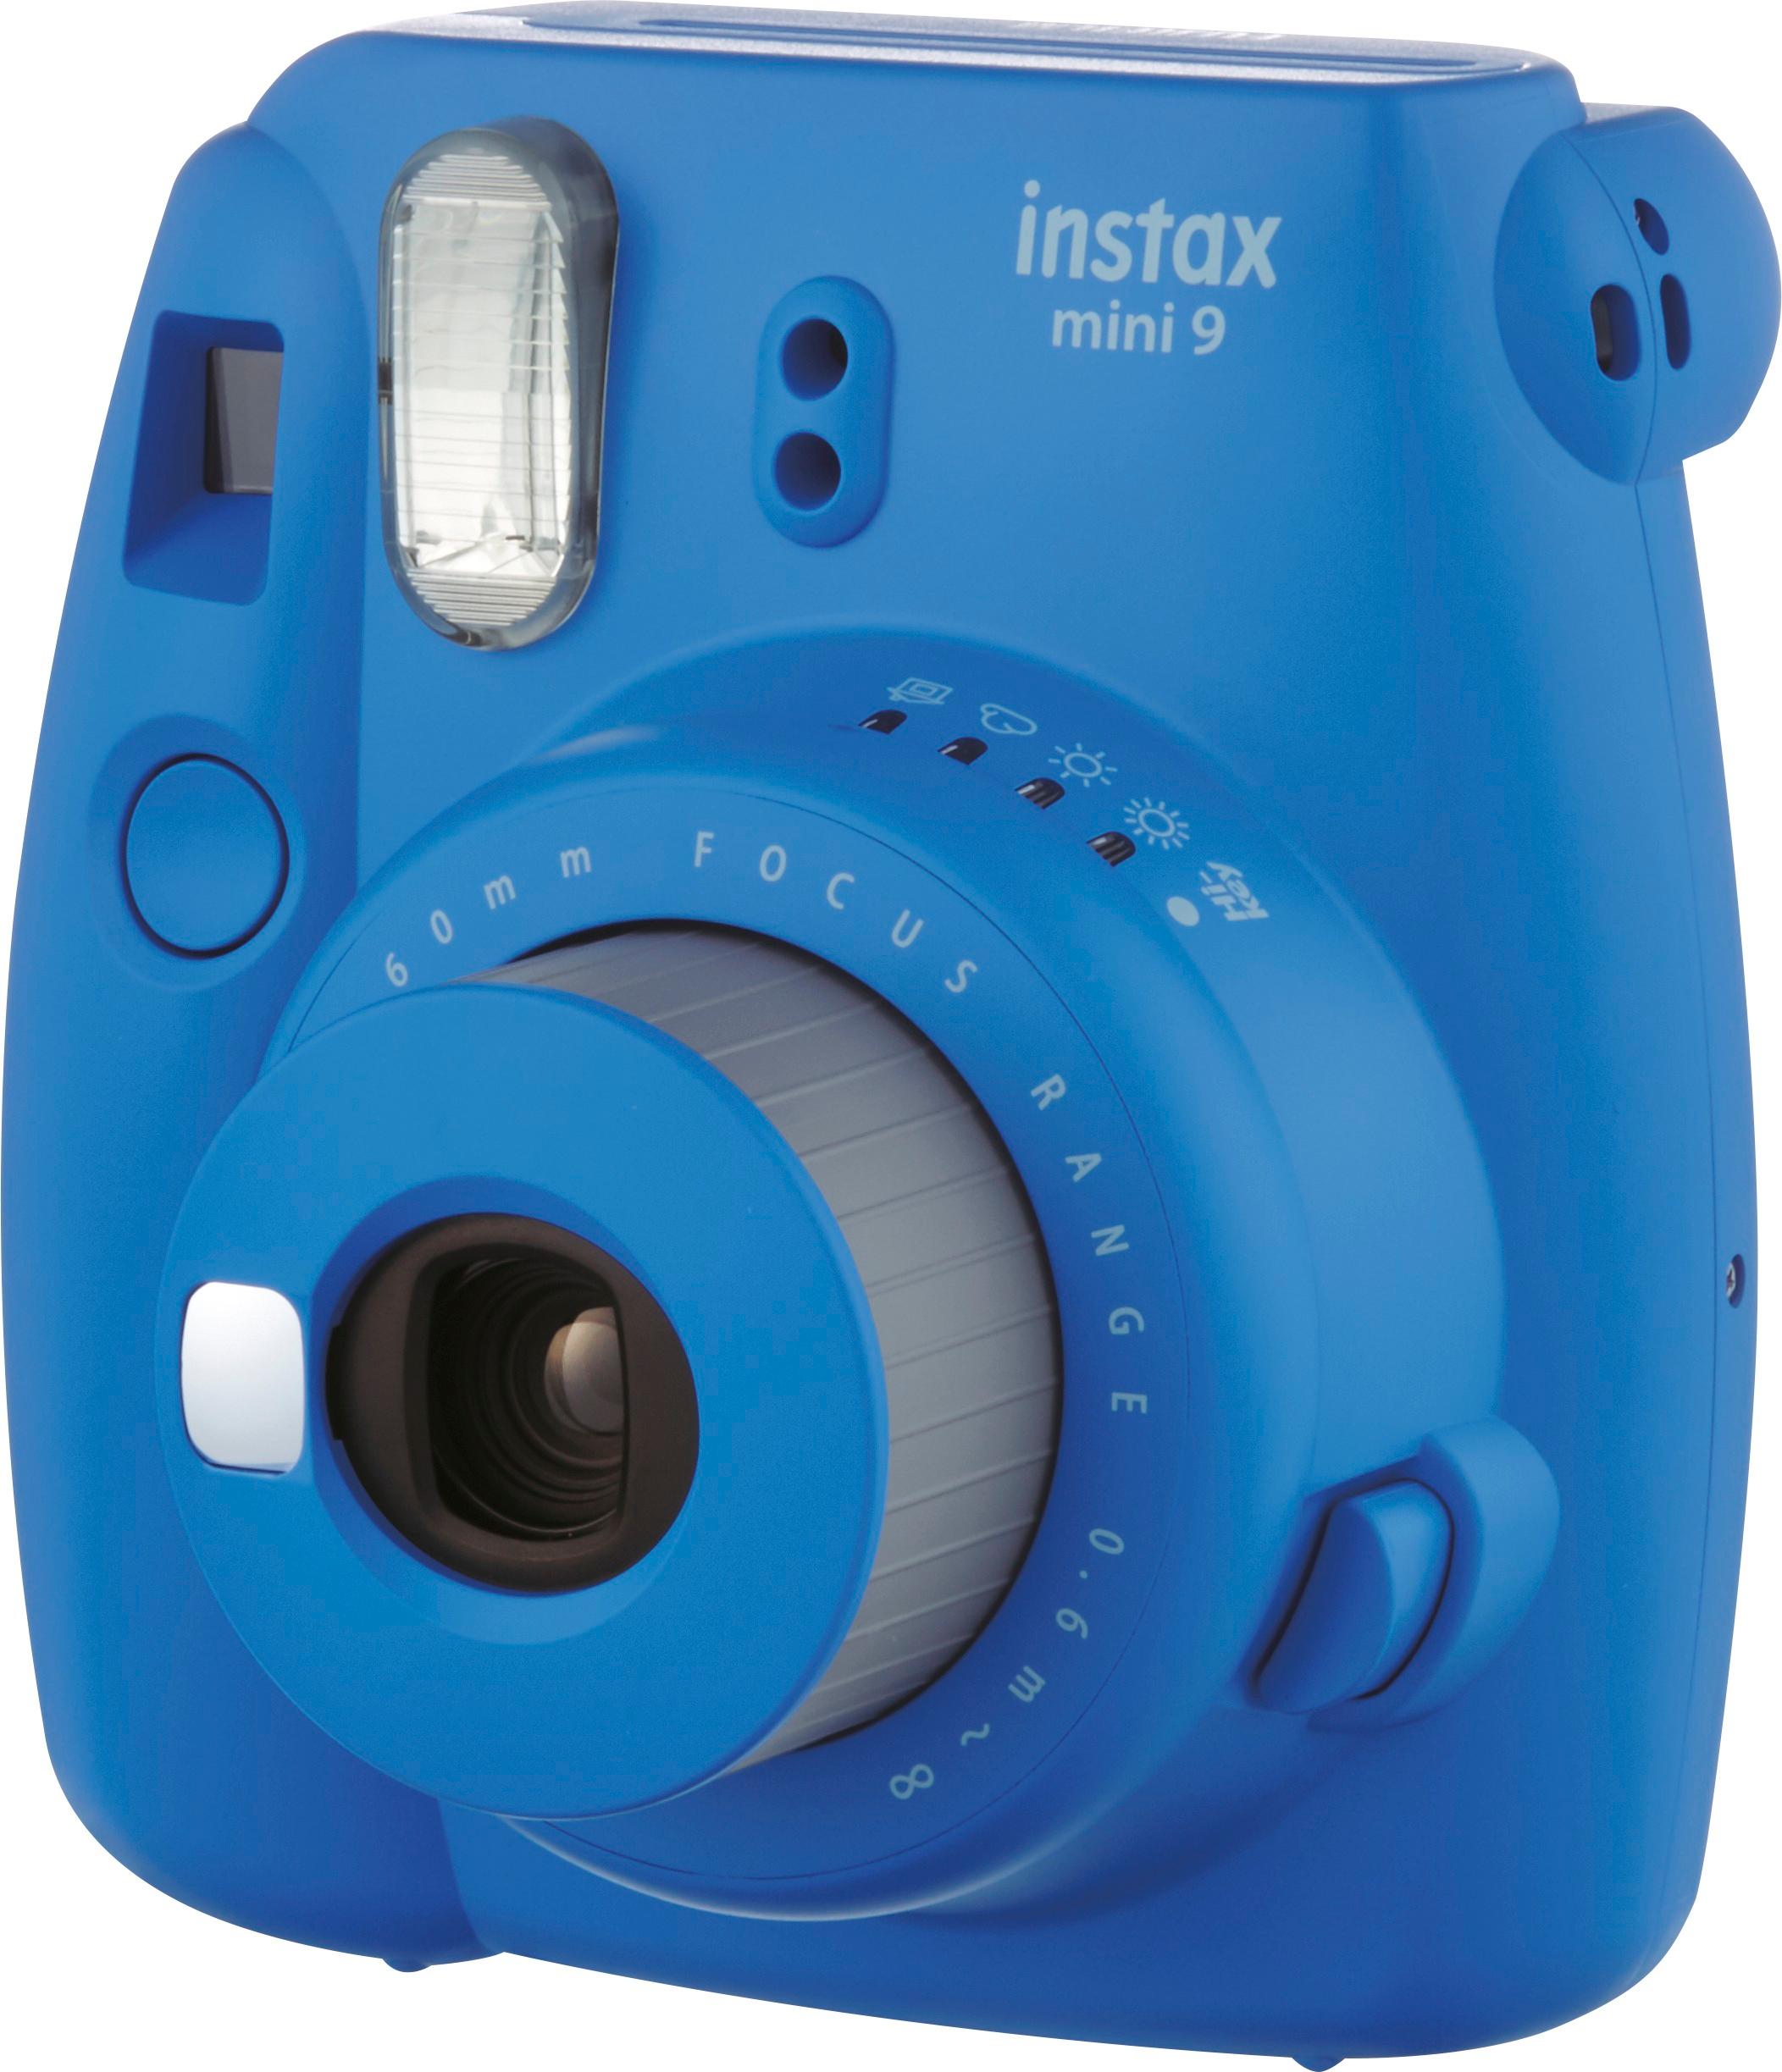 Camara Fujifilm Mini 9 Instax Cobalt Blue+Pack Pelicula x20unid - Promart